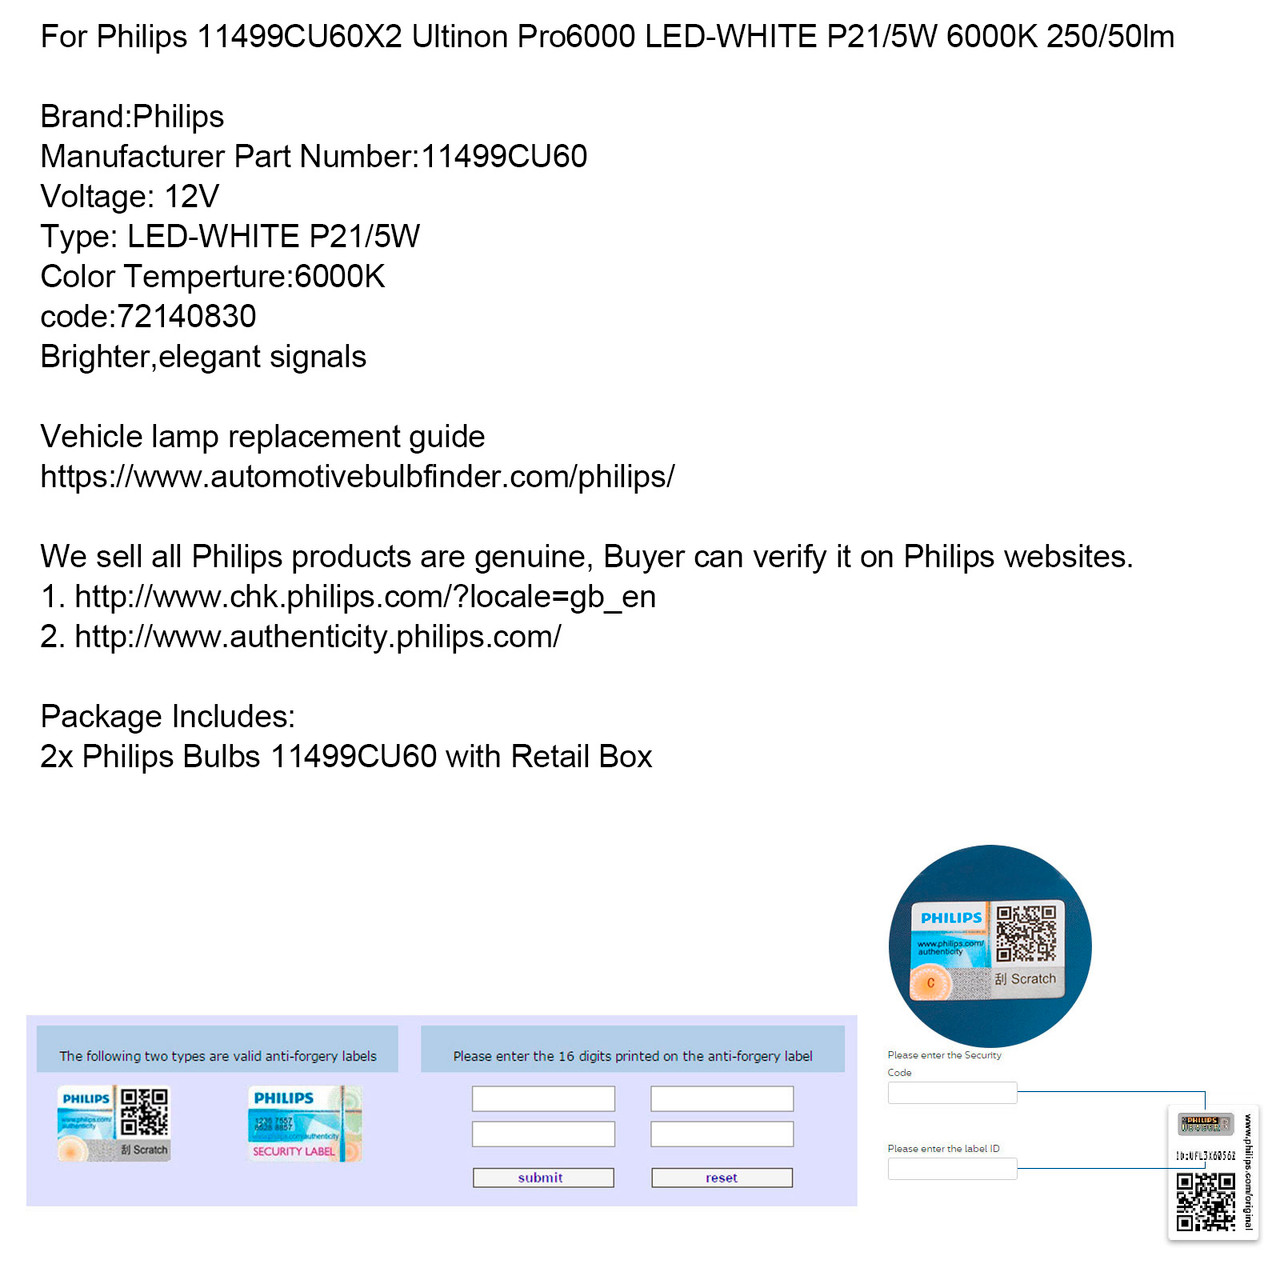 2x P21/5W LED Ultinon Pro6000 BLANC - Philips - 11499CU60X2